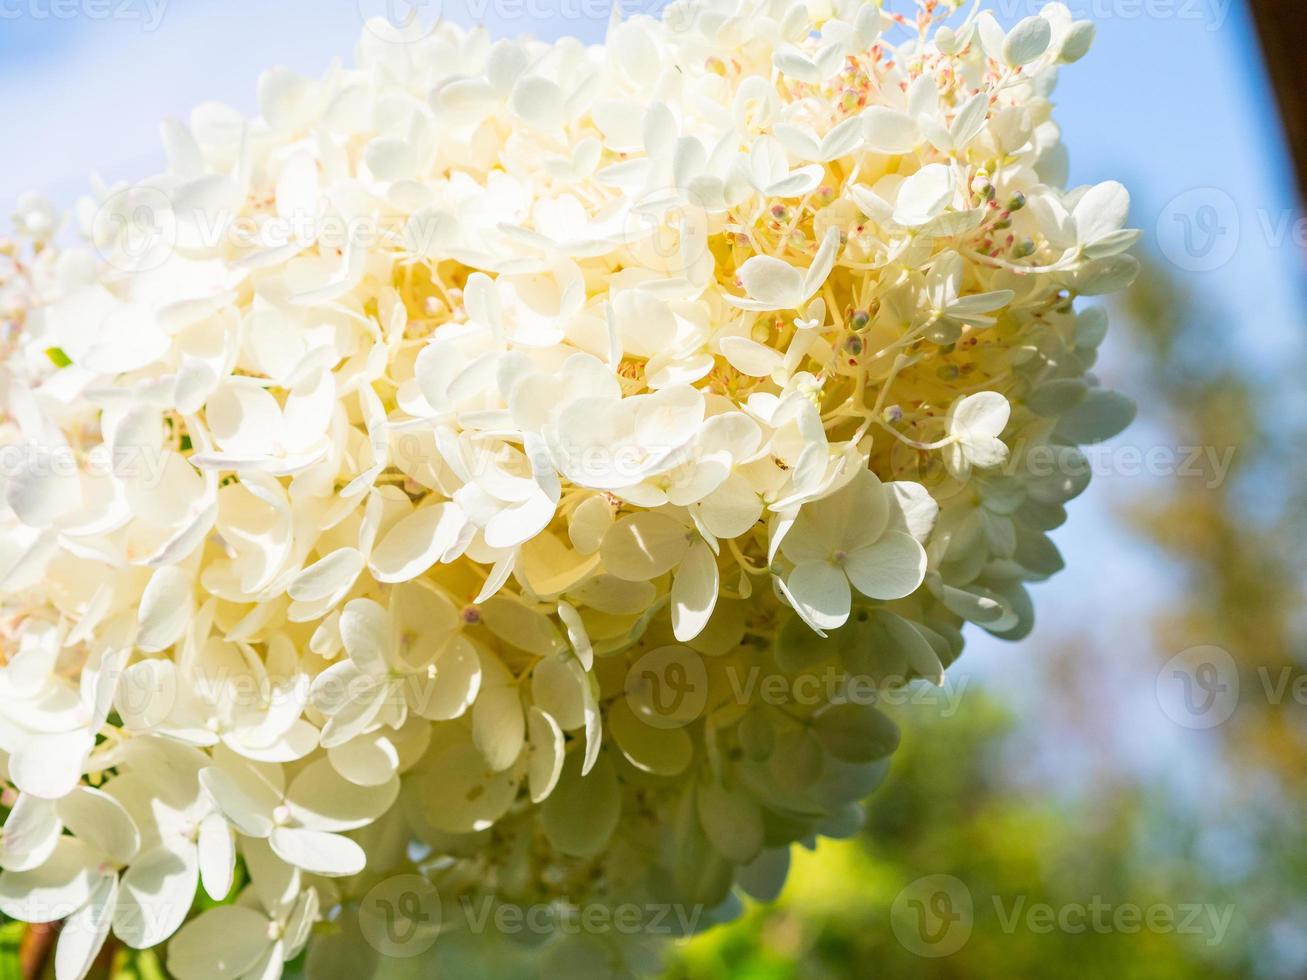 linda hortênsia branca florescendo grande, fundo floral foto